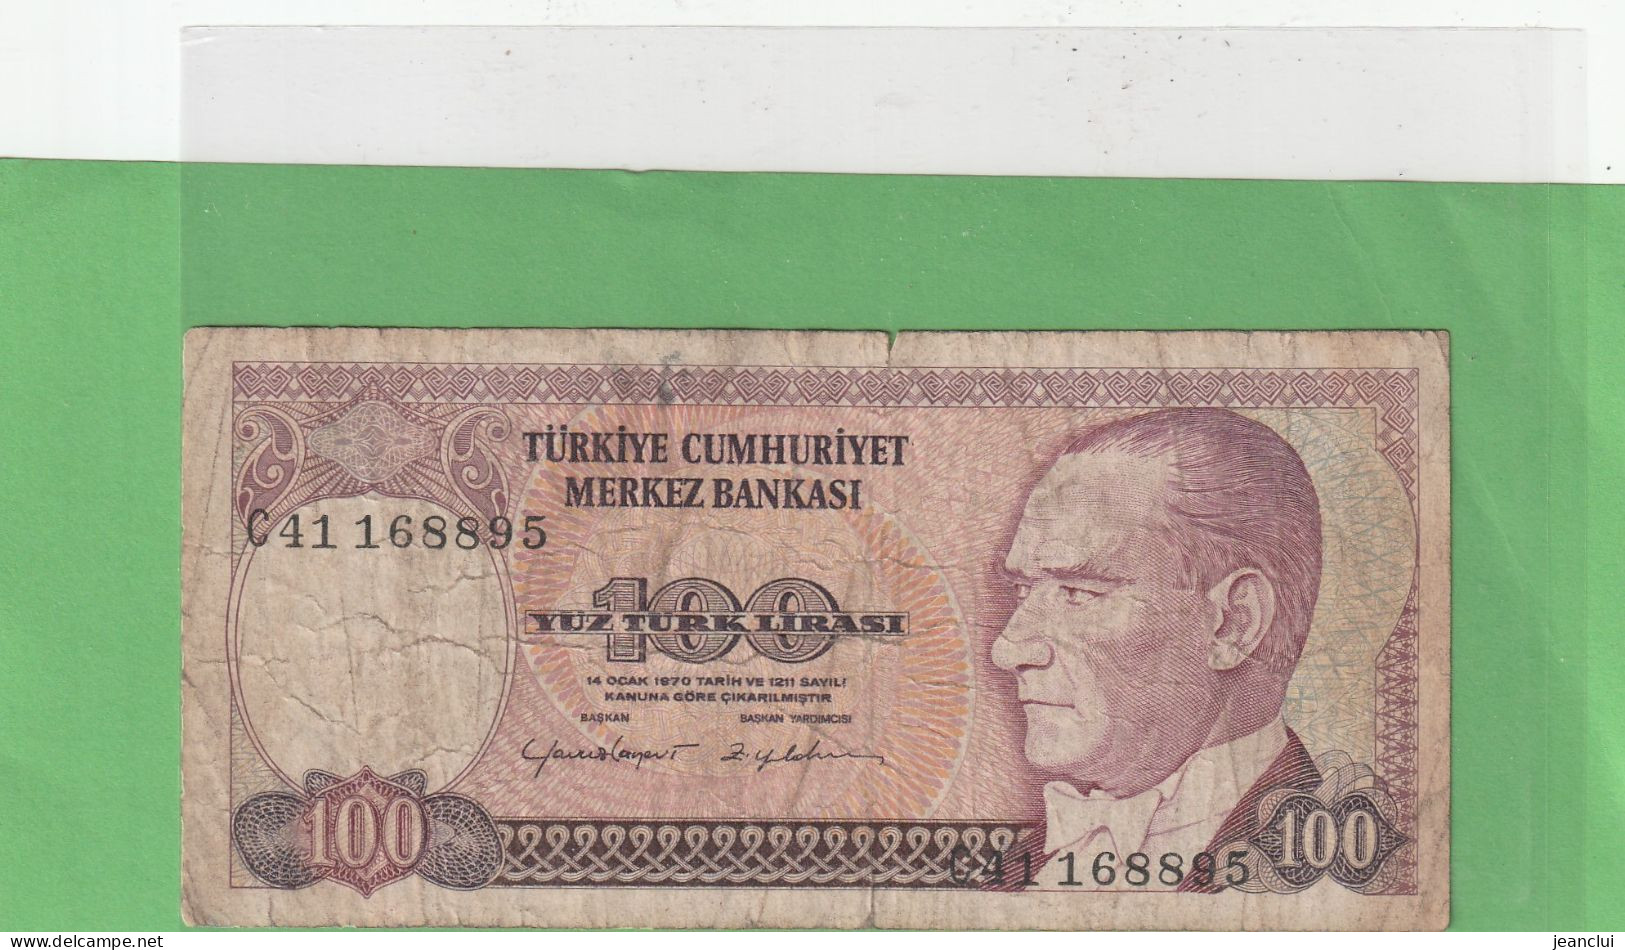 TURKIYE CUMHURIYET MERKEZ BANKASI . 100 LIRA . 14 OCAK 1970  . N°  C41 168895 .  2 SCANNES  .  BILLET USITE - Turkey